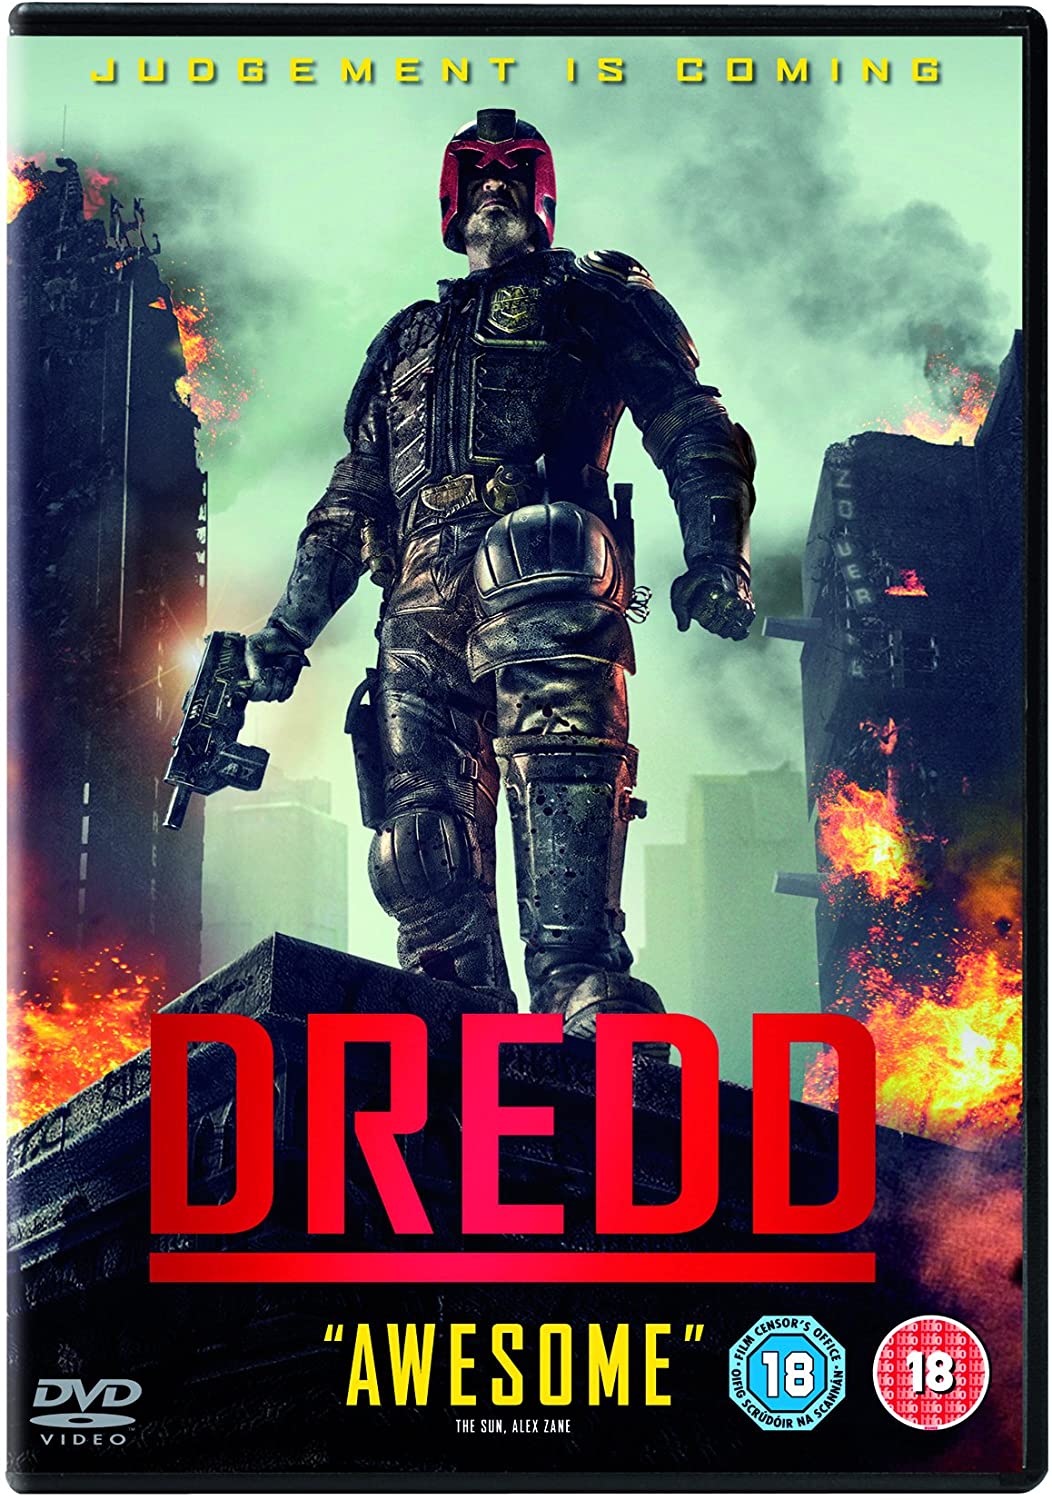 Dredd – Action/Sci-Fi [DVD]